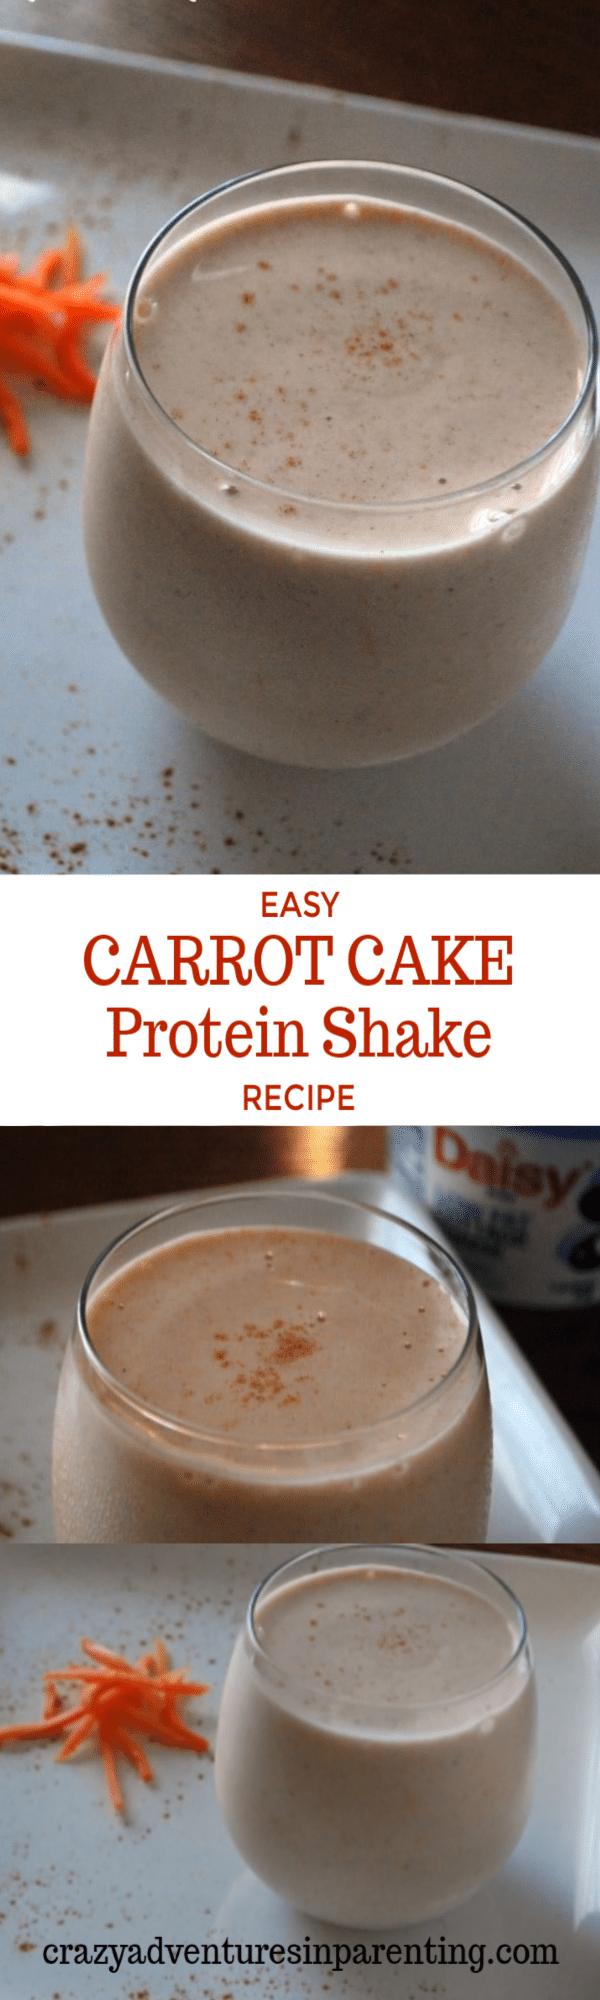 Easy Carrot Cake Protein Shake Recipe